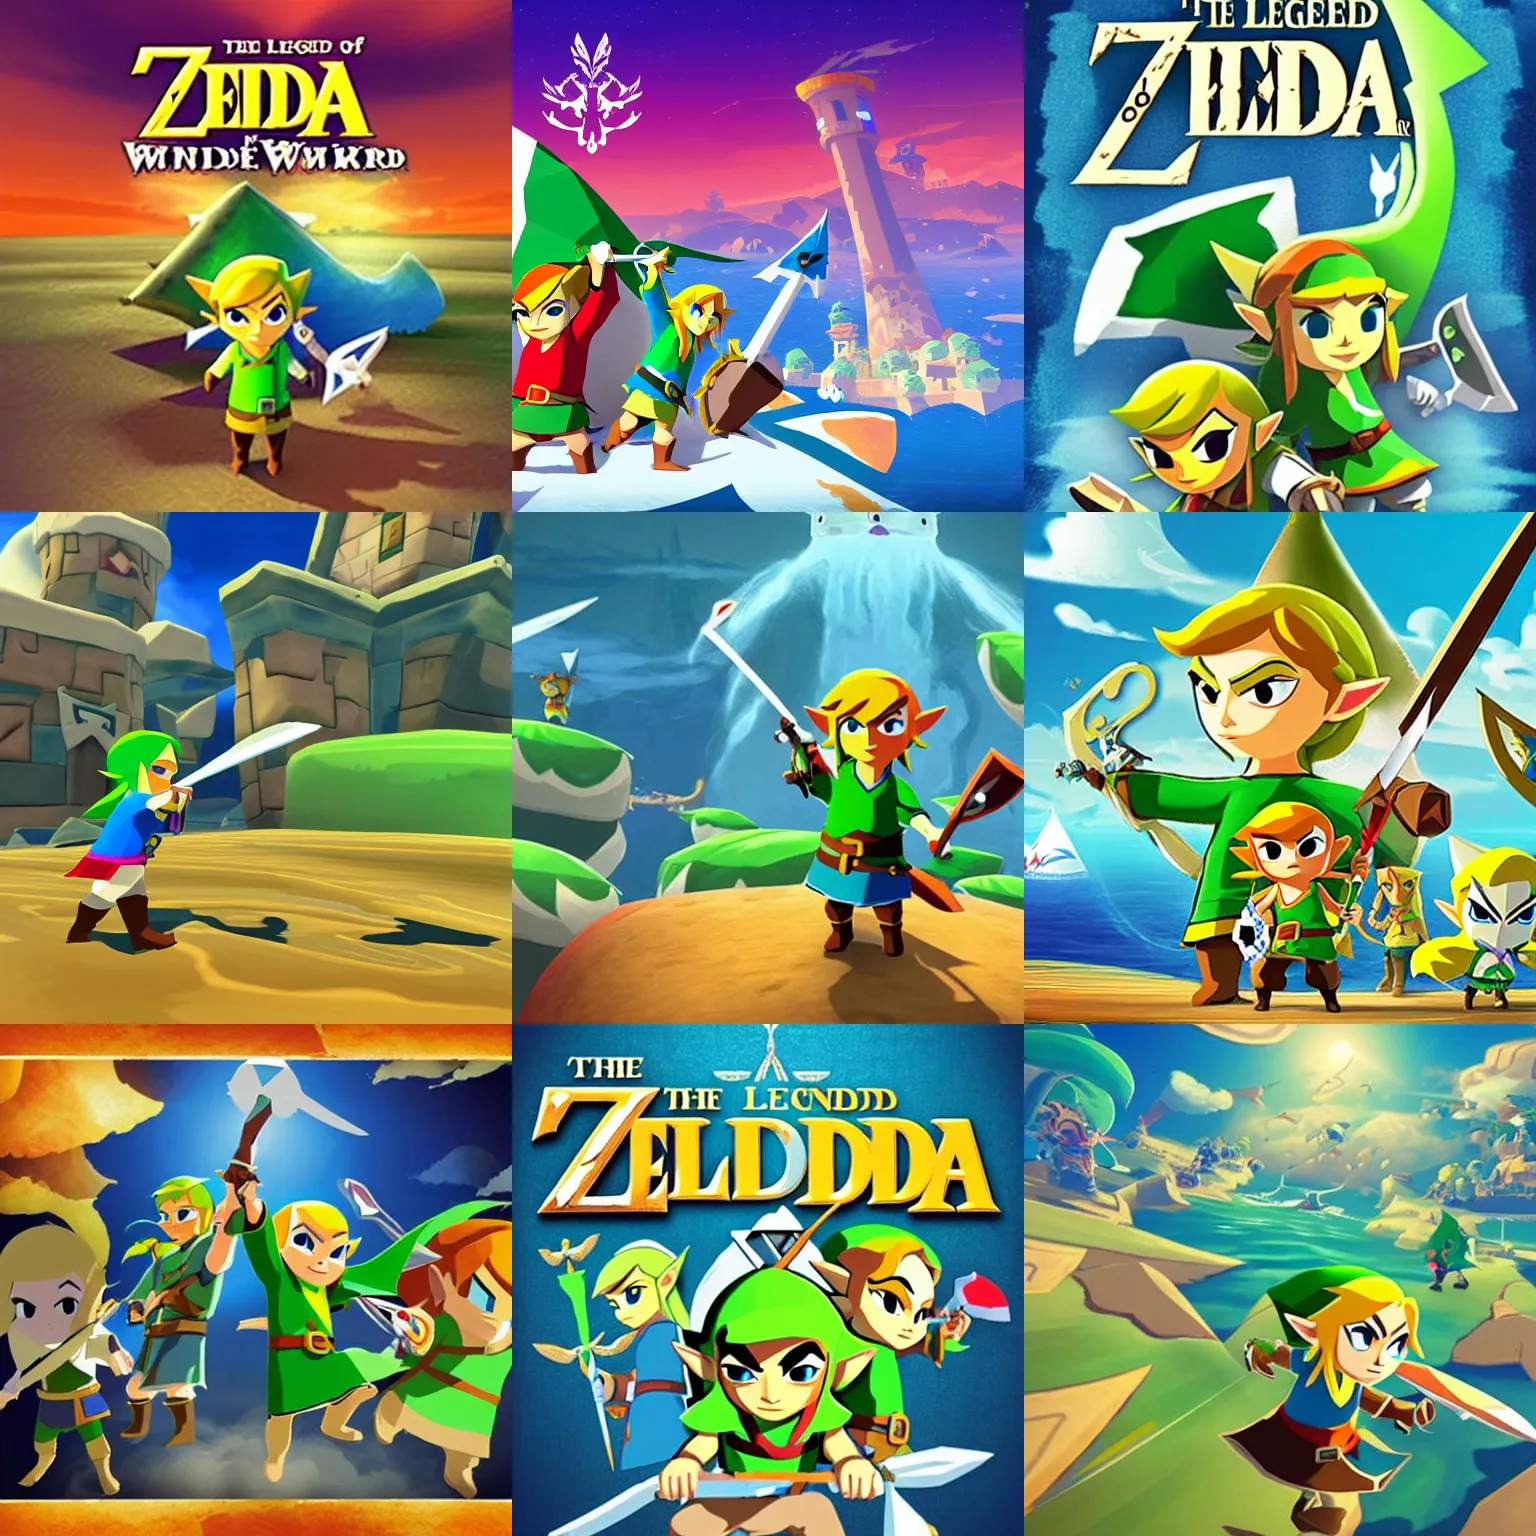 Prompt: The Legend of Zelda The Wind Waker